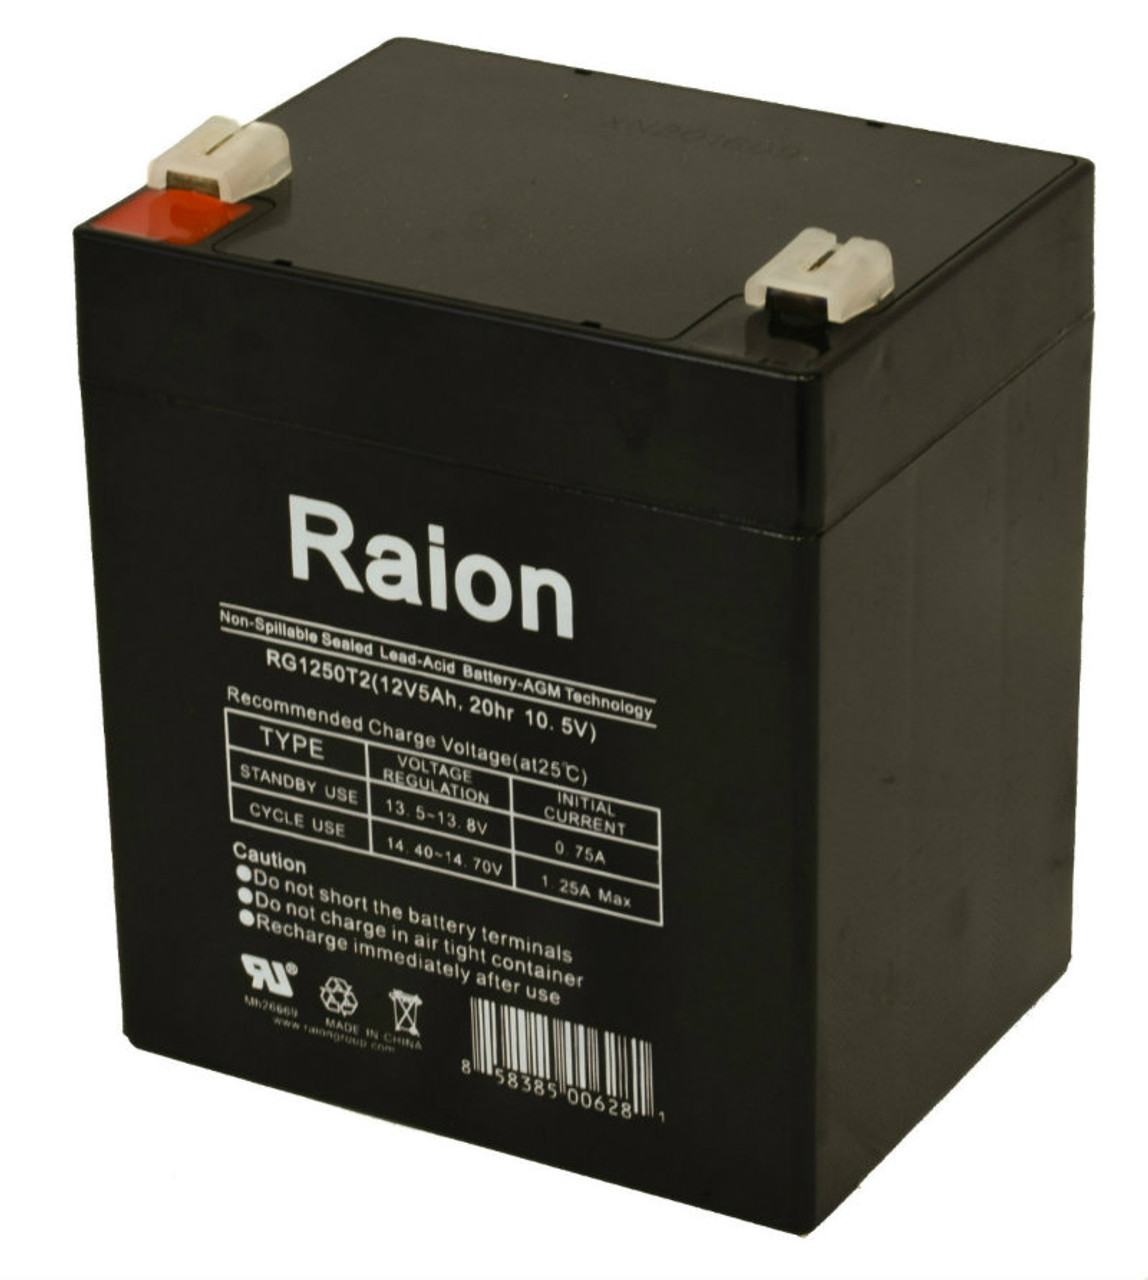 Raion Power RG1250T1 Replacement Battery for Kinghero SJ12V6Ah